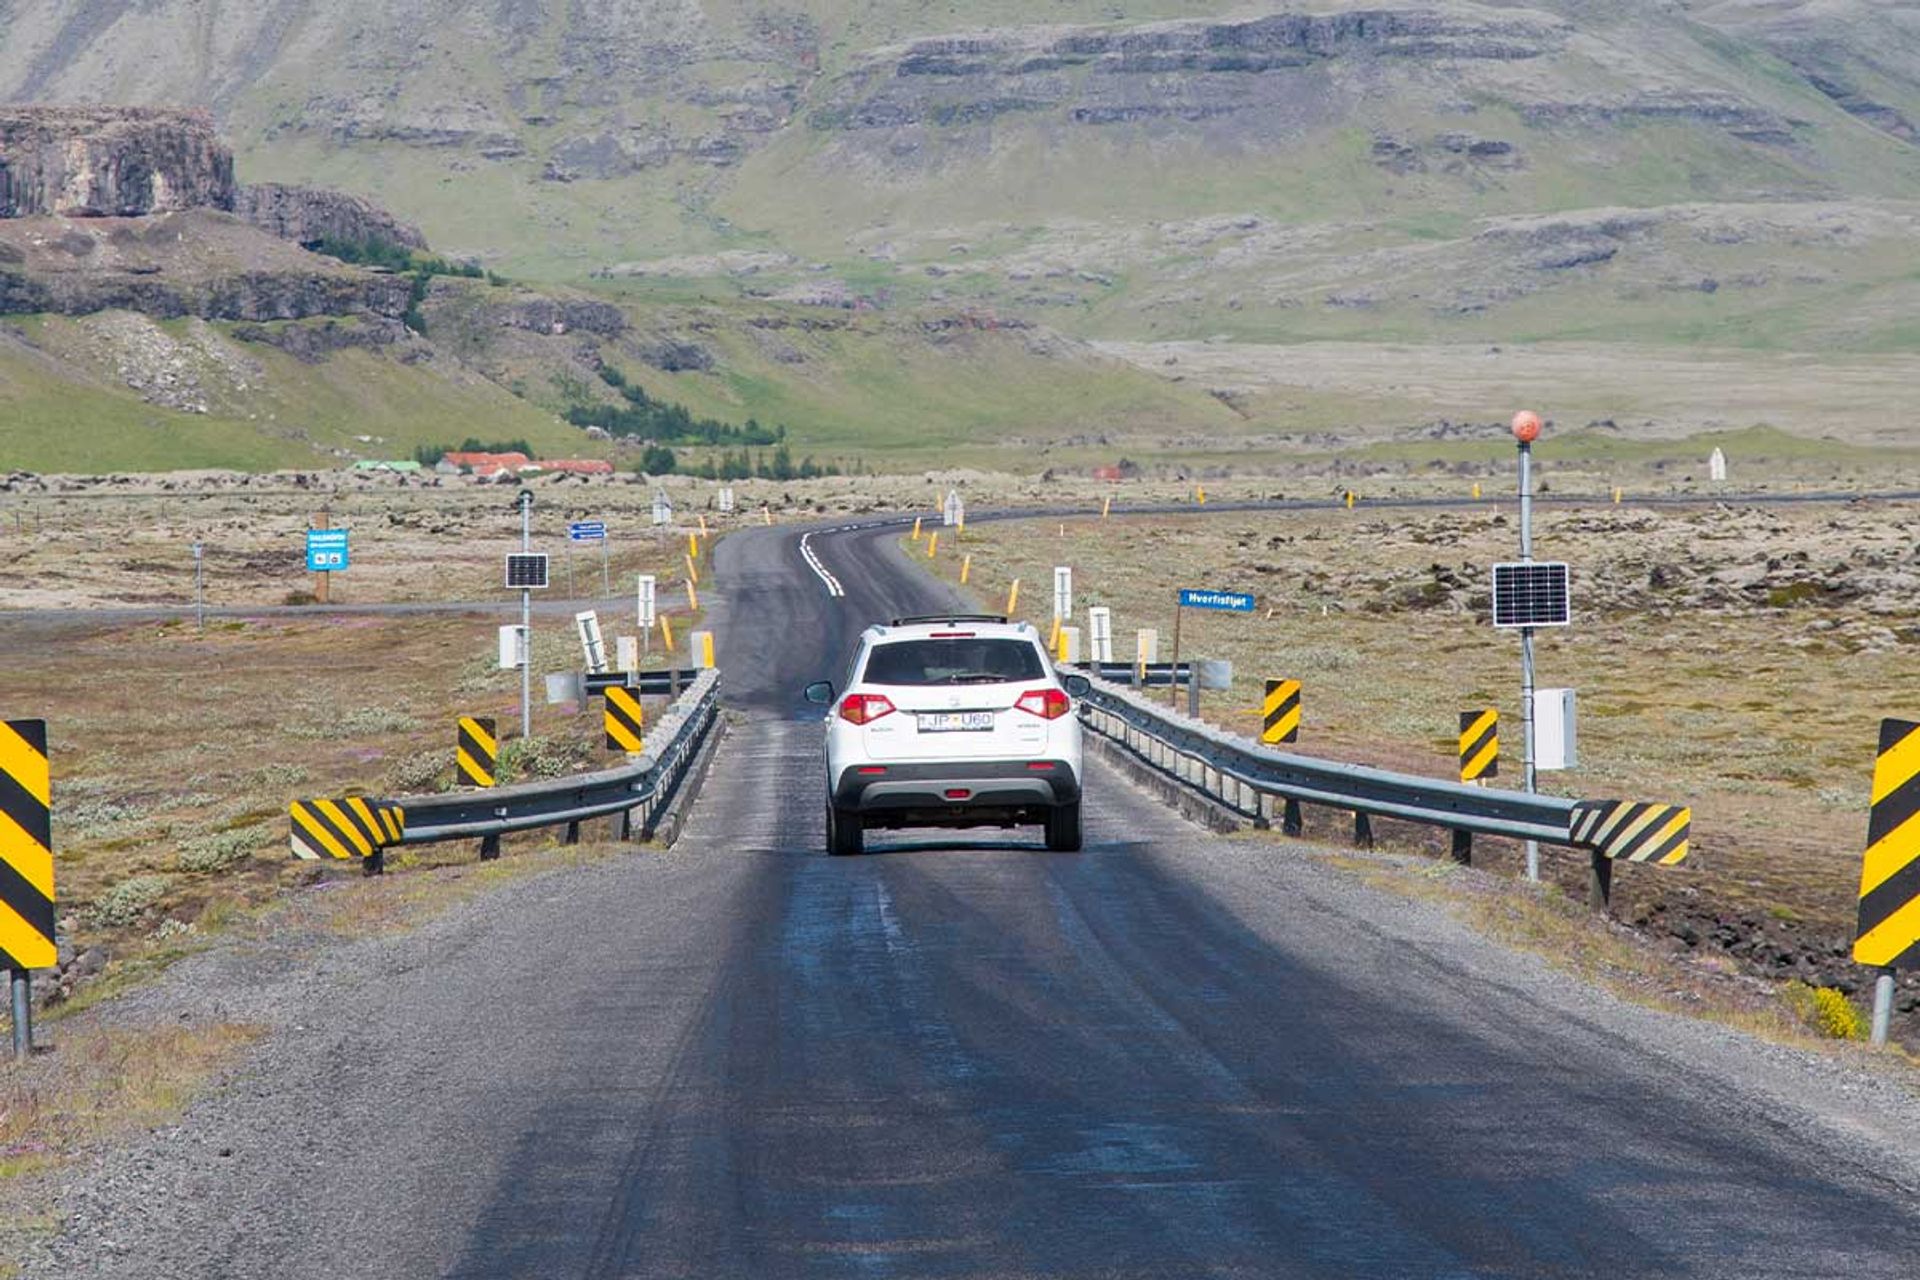 Single Lane Bridge for cars in Iceland 